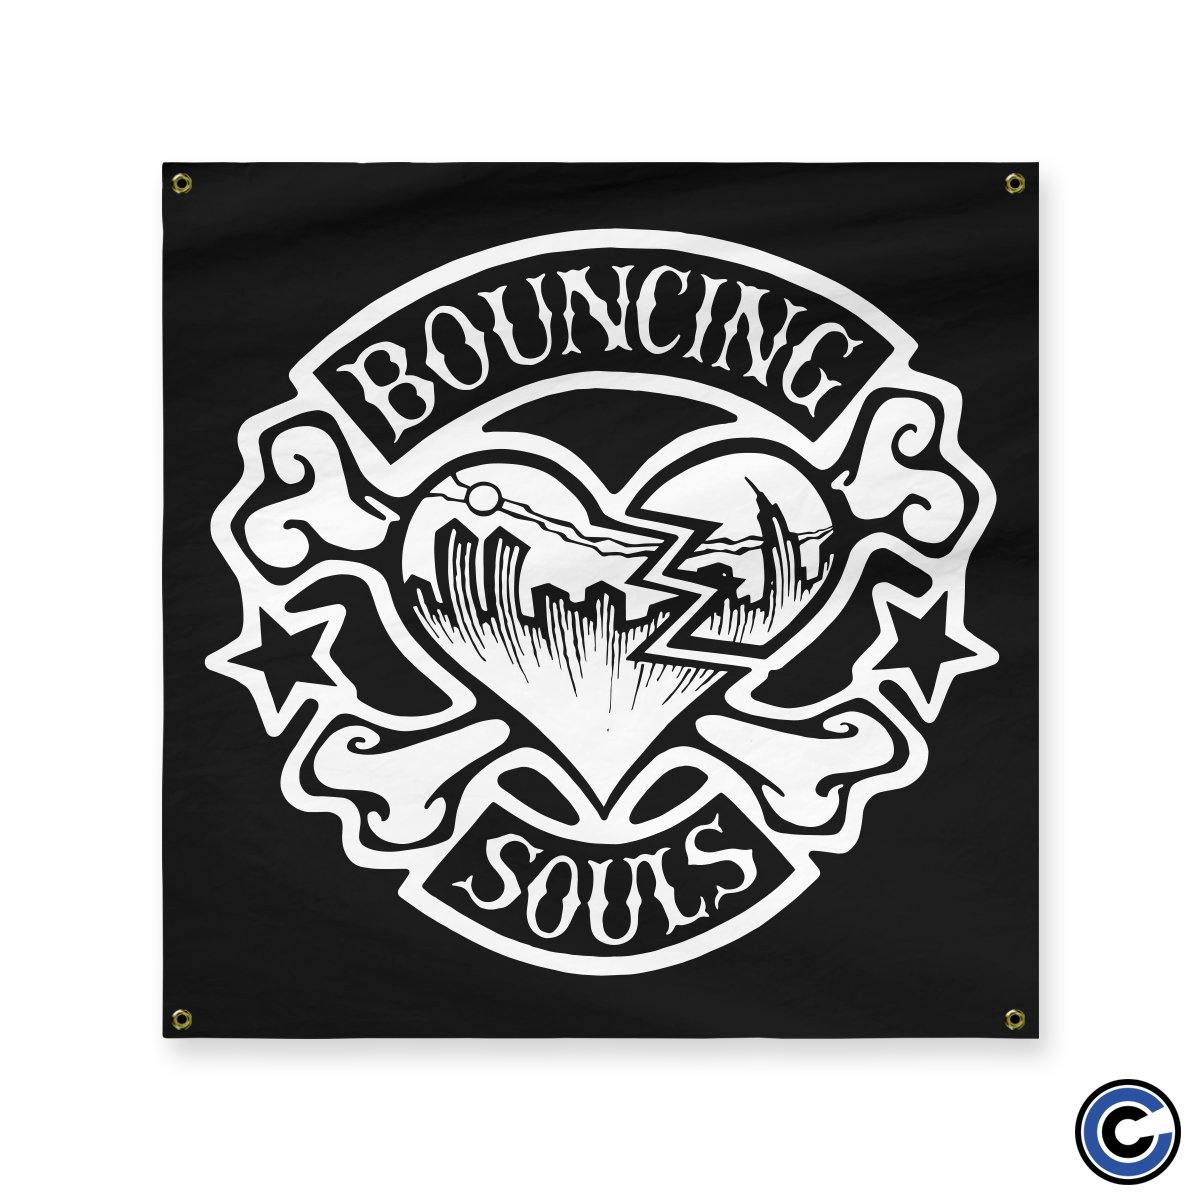 Buy – The Bouncing Souls "Rocker Heart" Flag – Band & Music Merch – Cold Cuts Merch